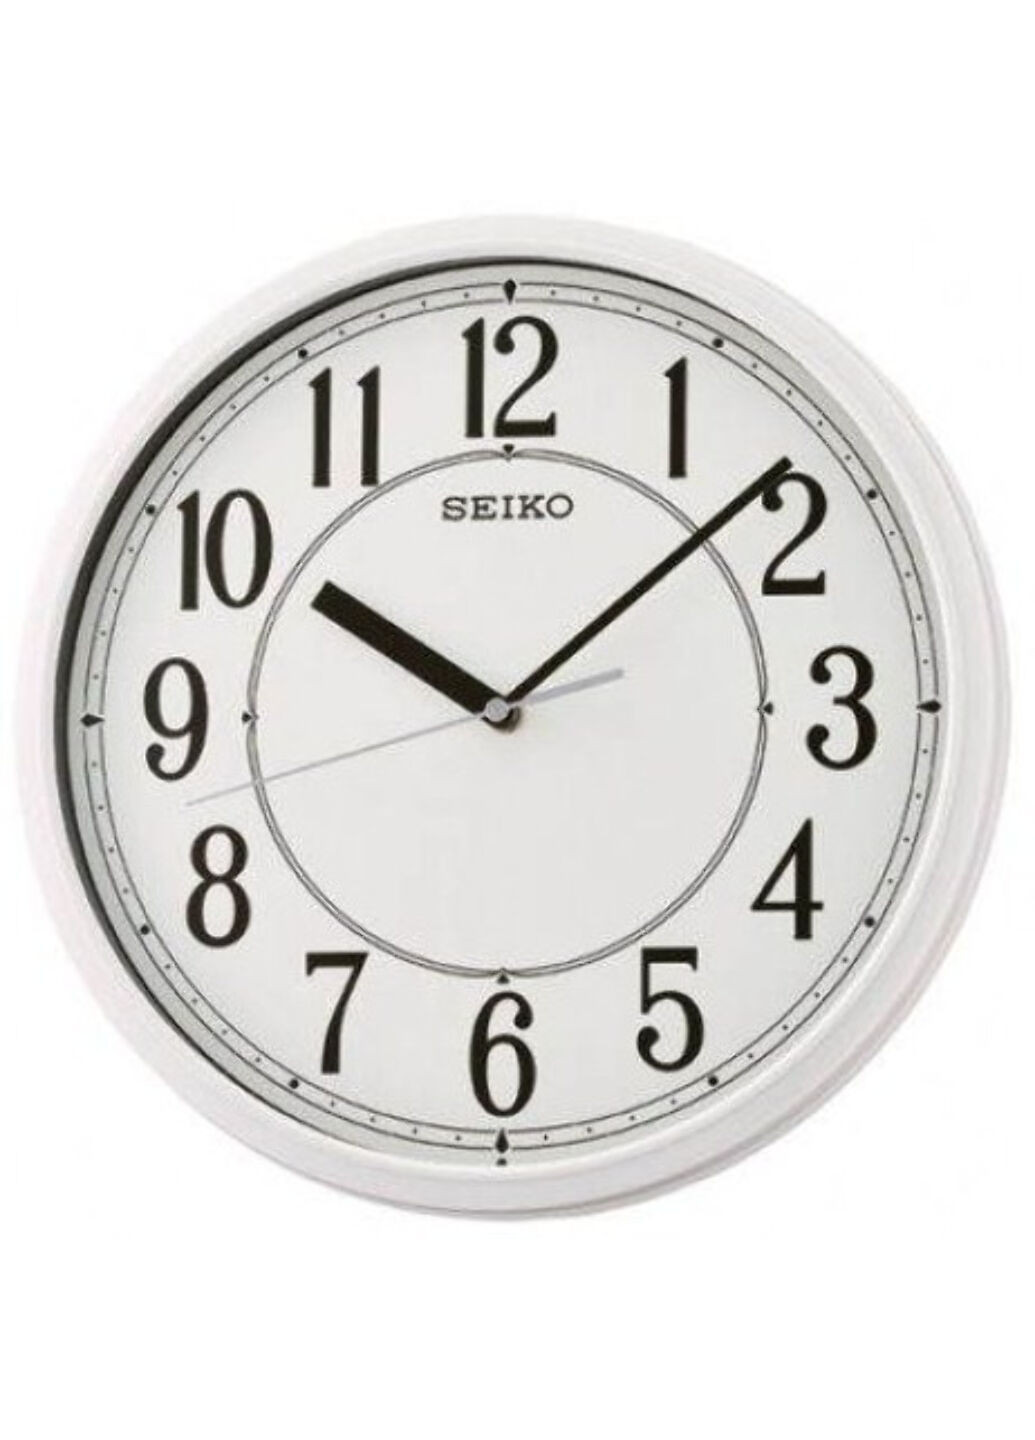 Годинники Seiko qxa756h (256646758)